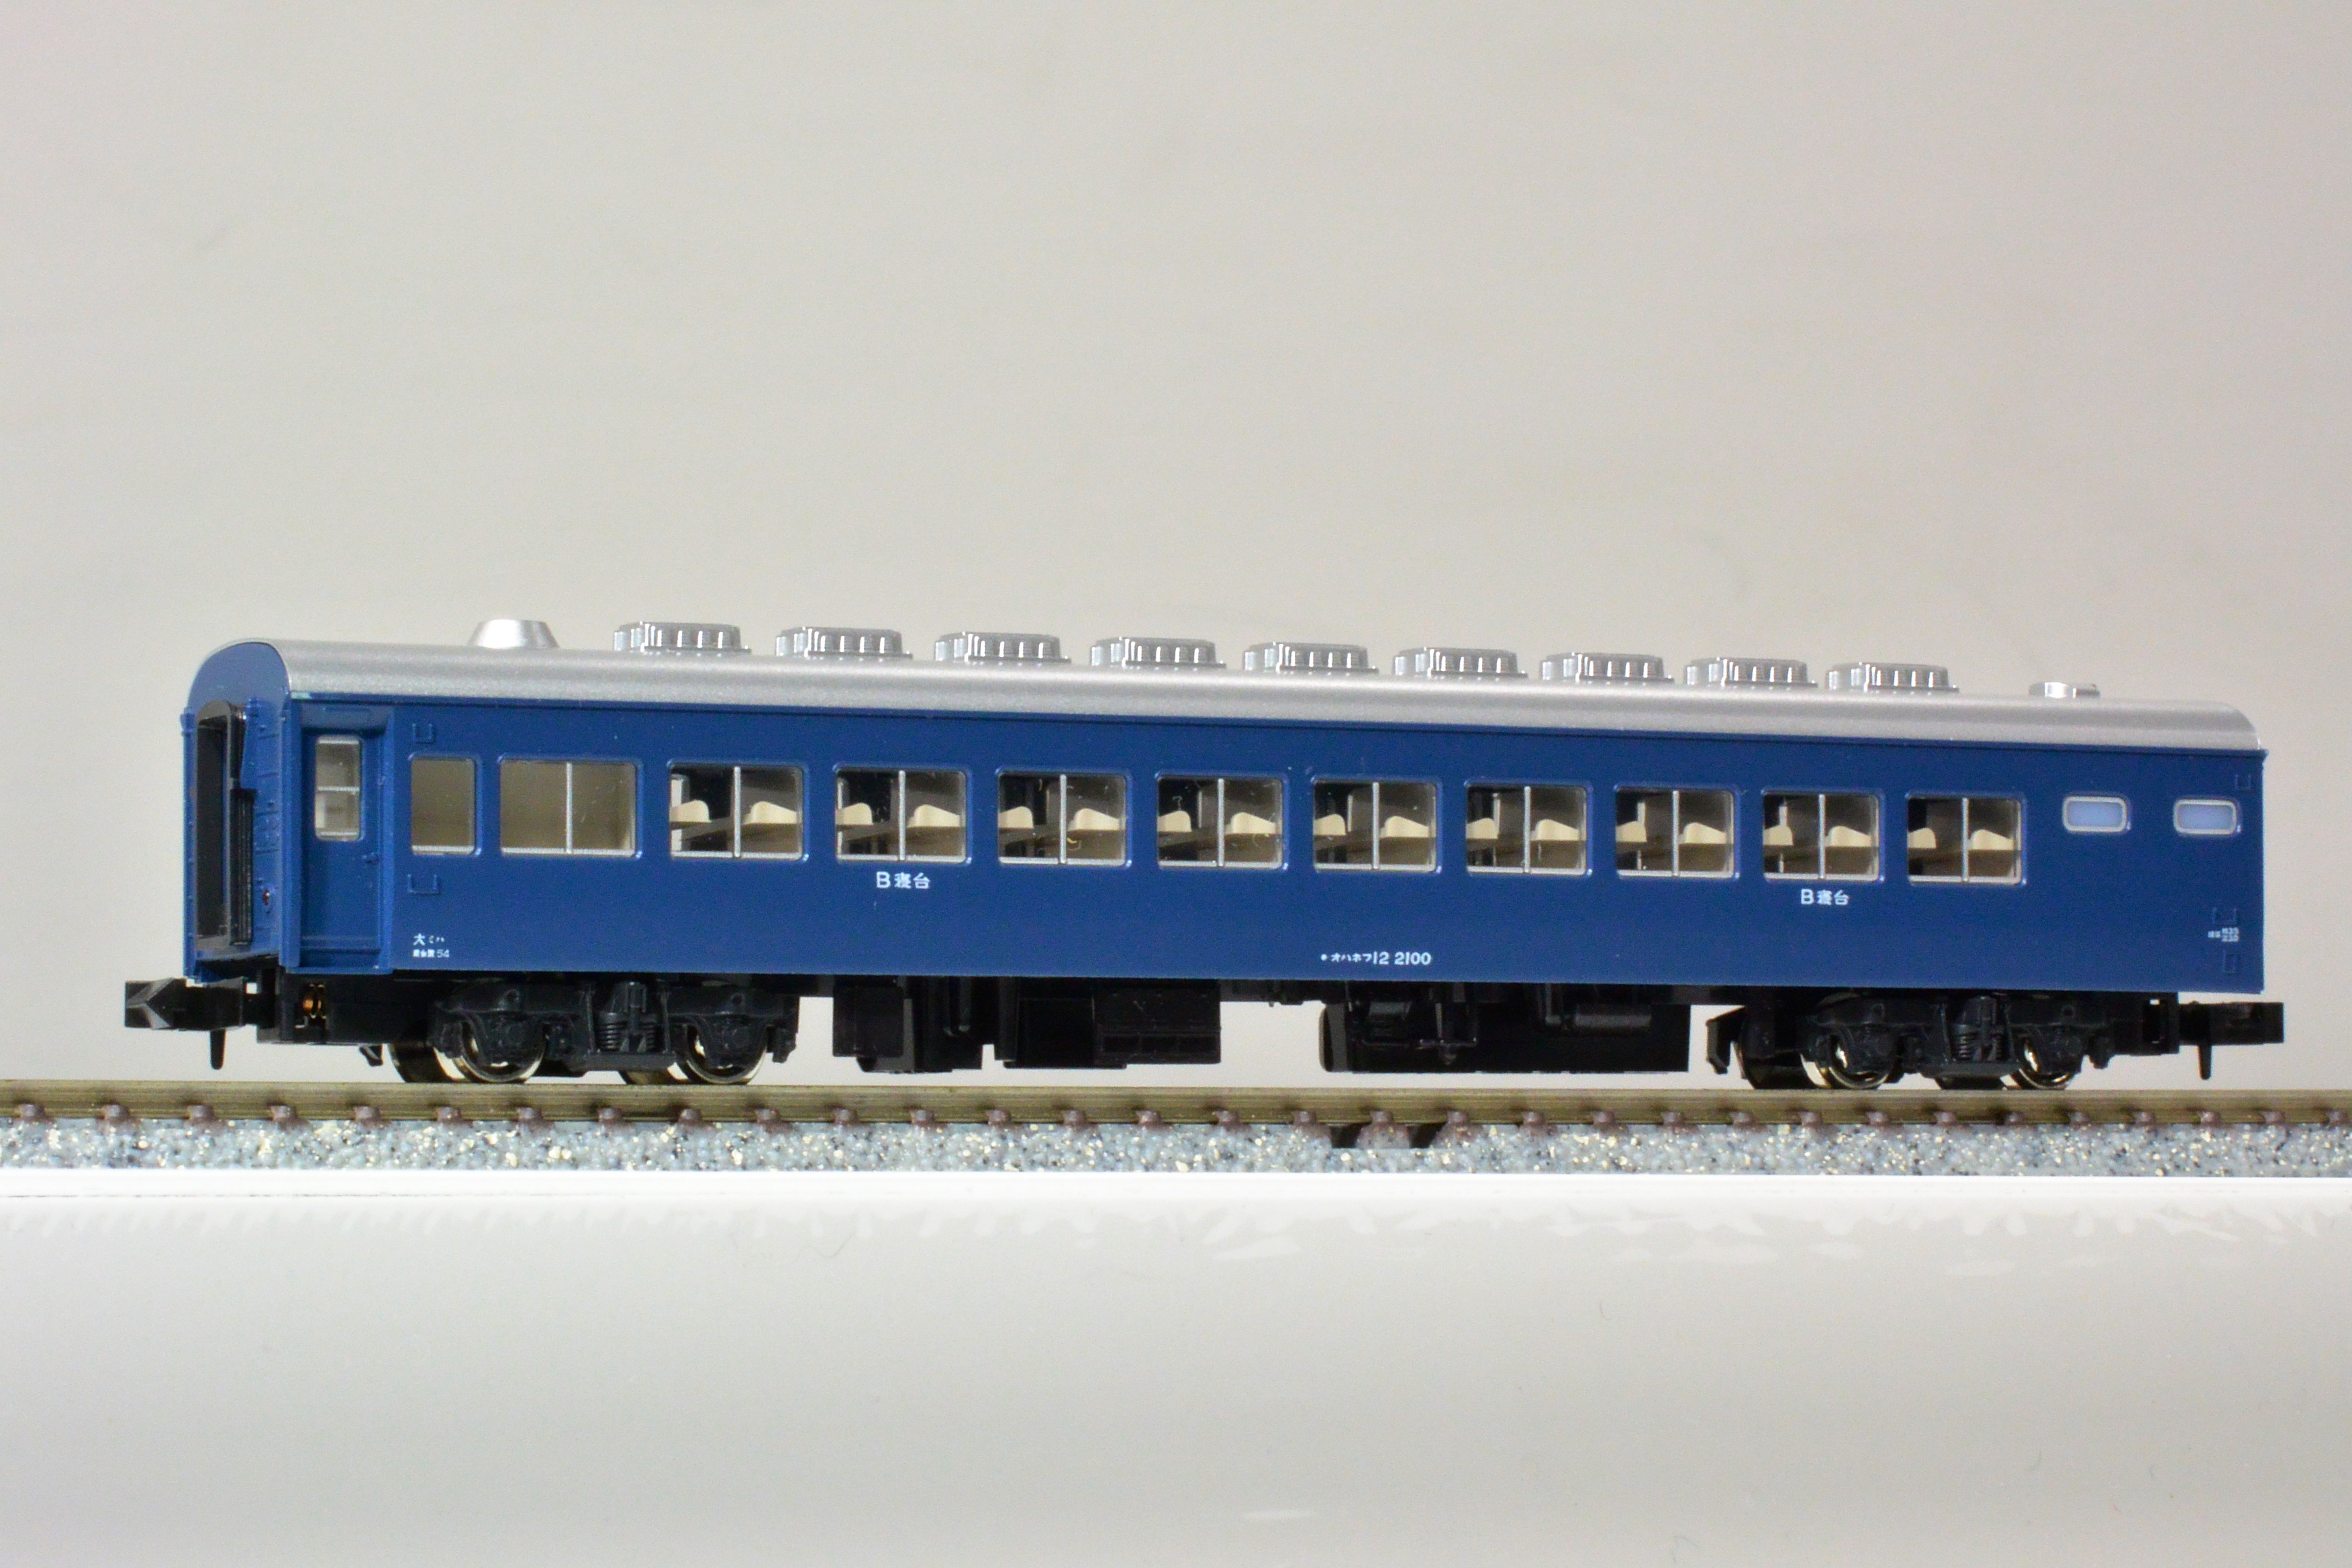 KATO】中古の10系客車シリーズと郵便車を入手 – 鉄道模型部